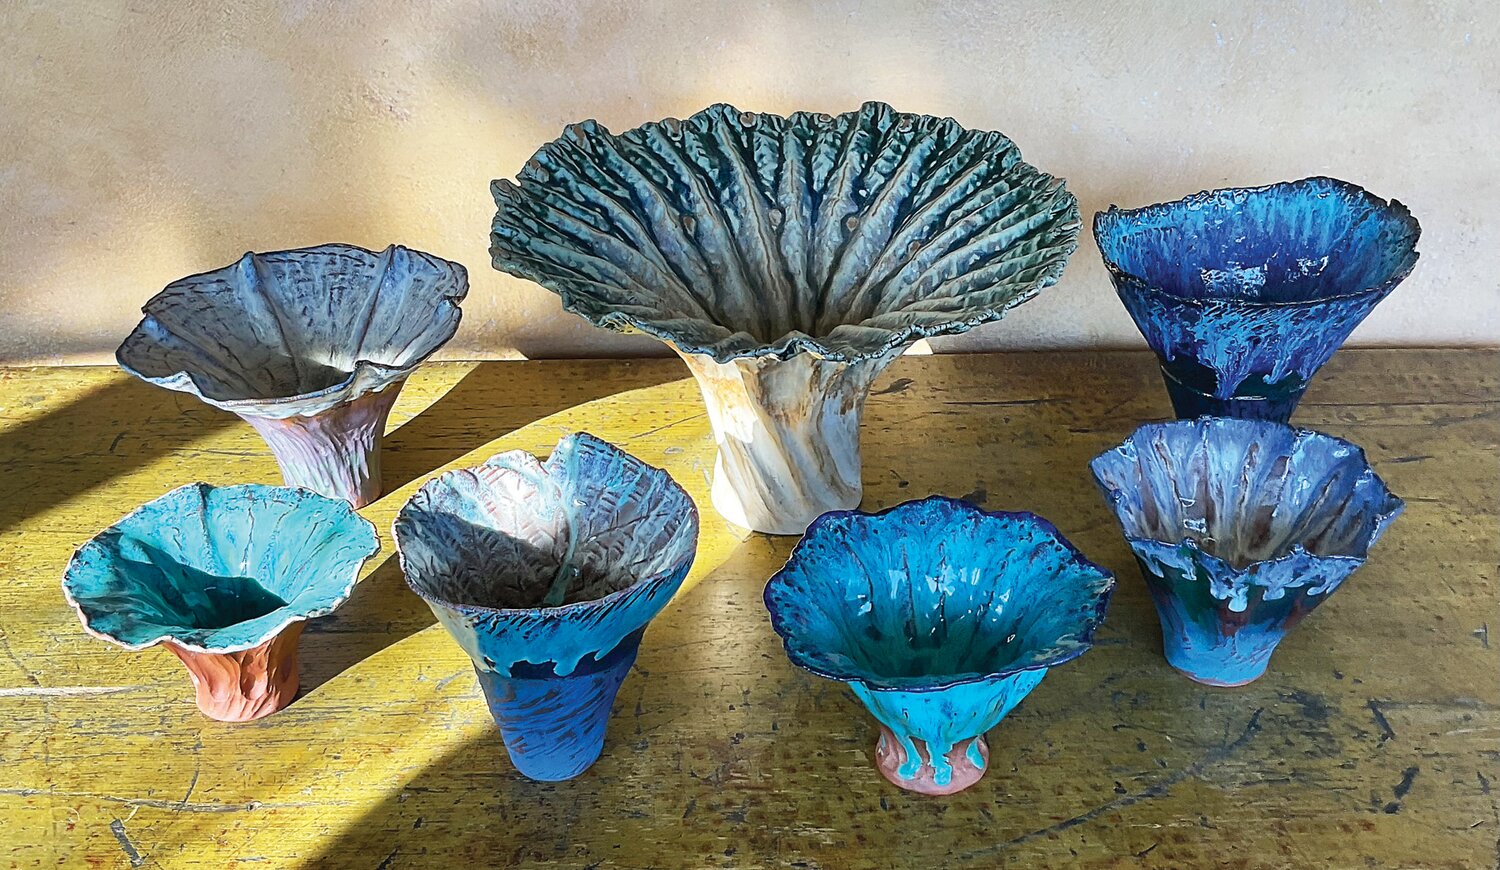 Ceramic vessels by Doug Sardo.